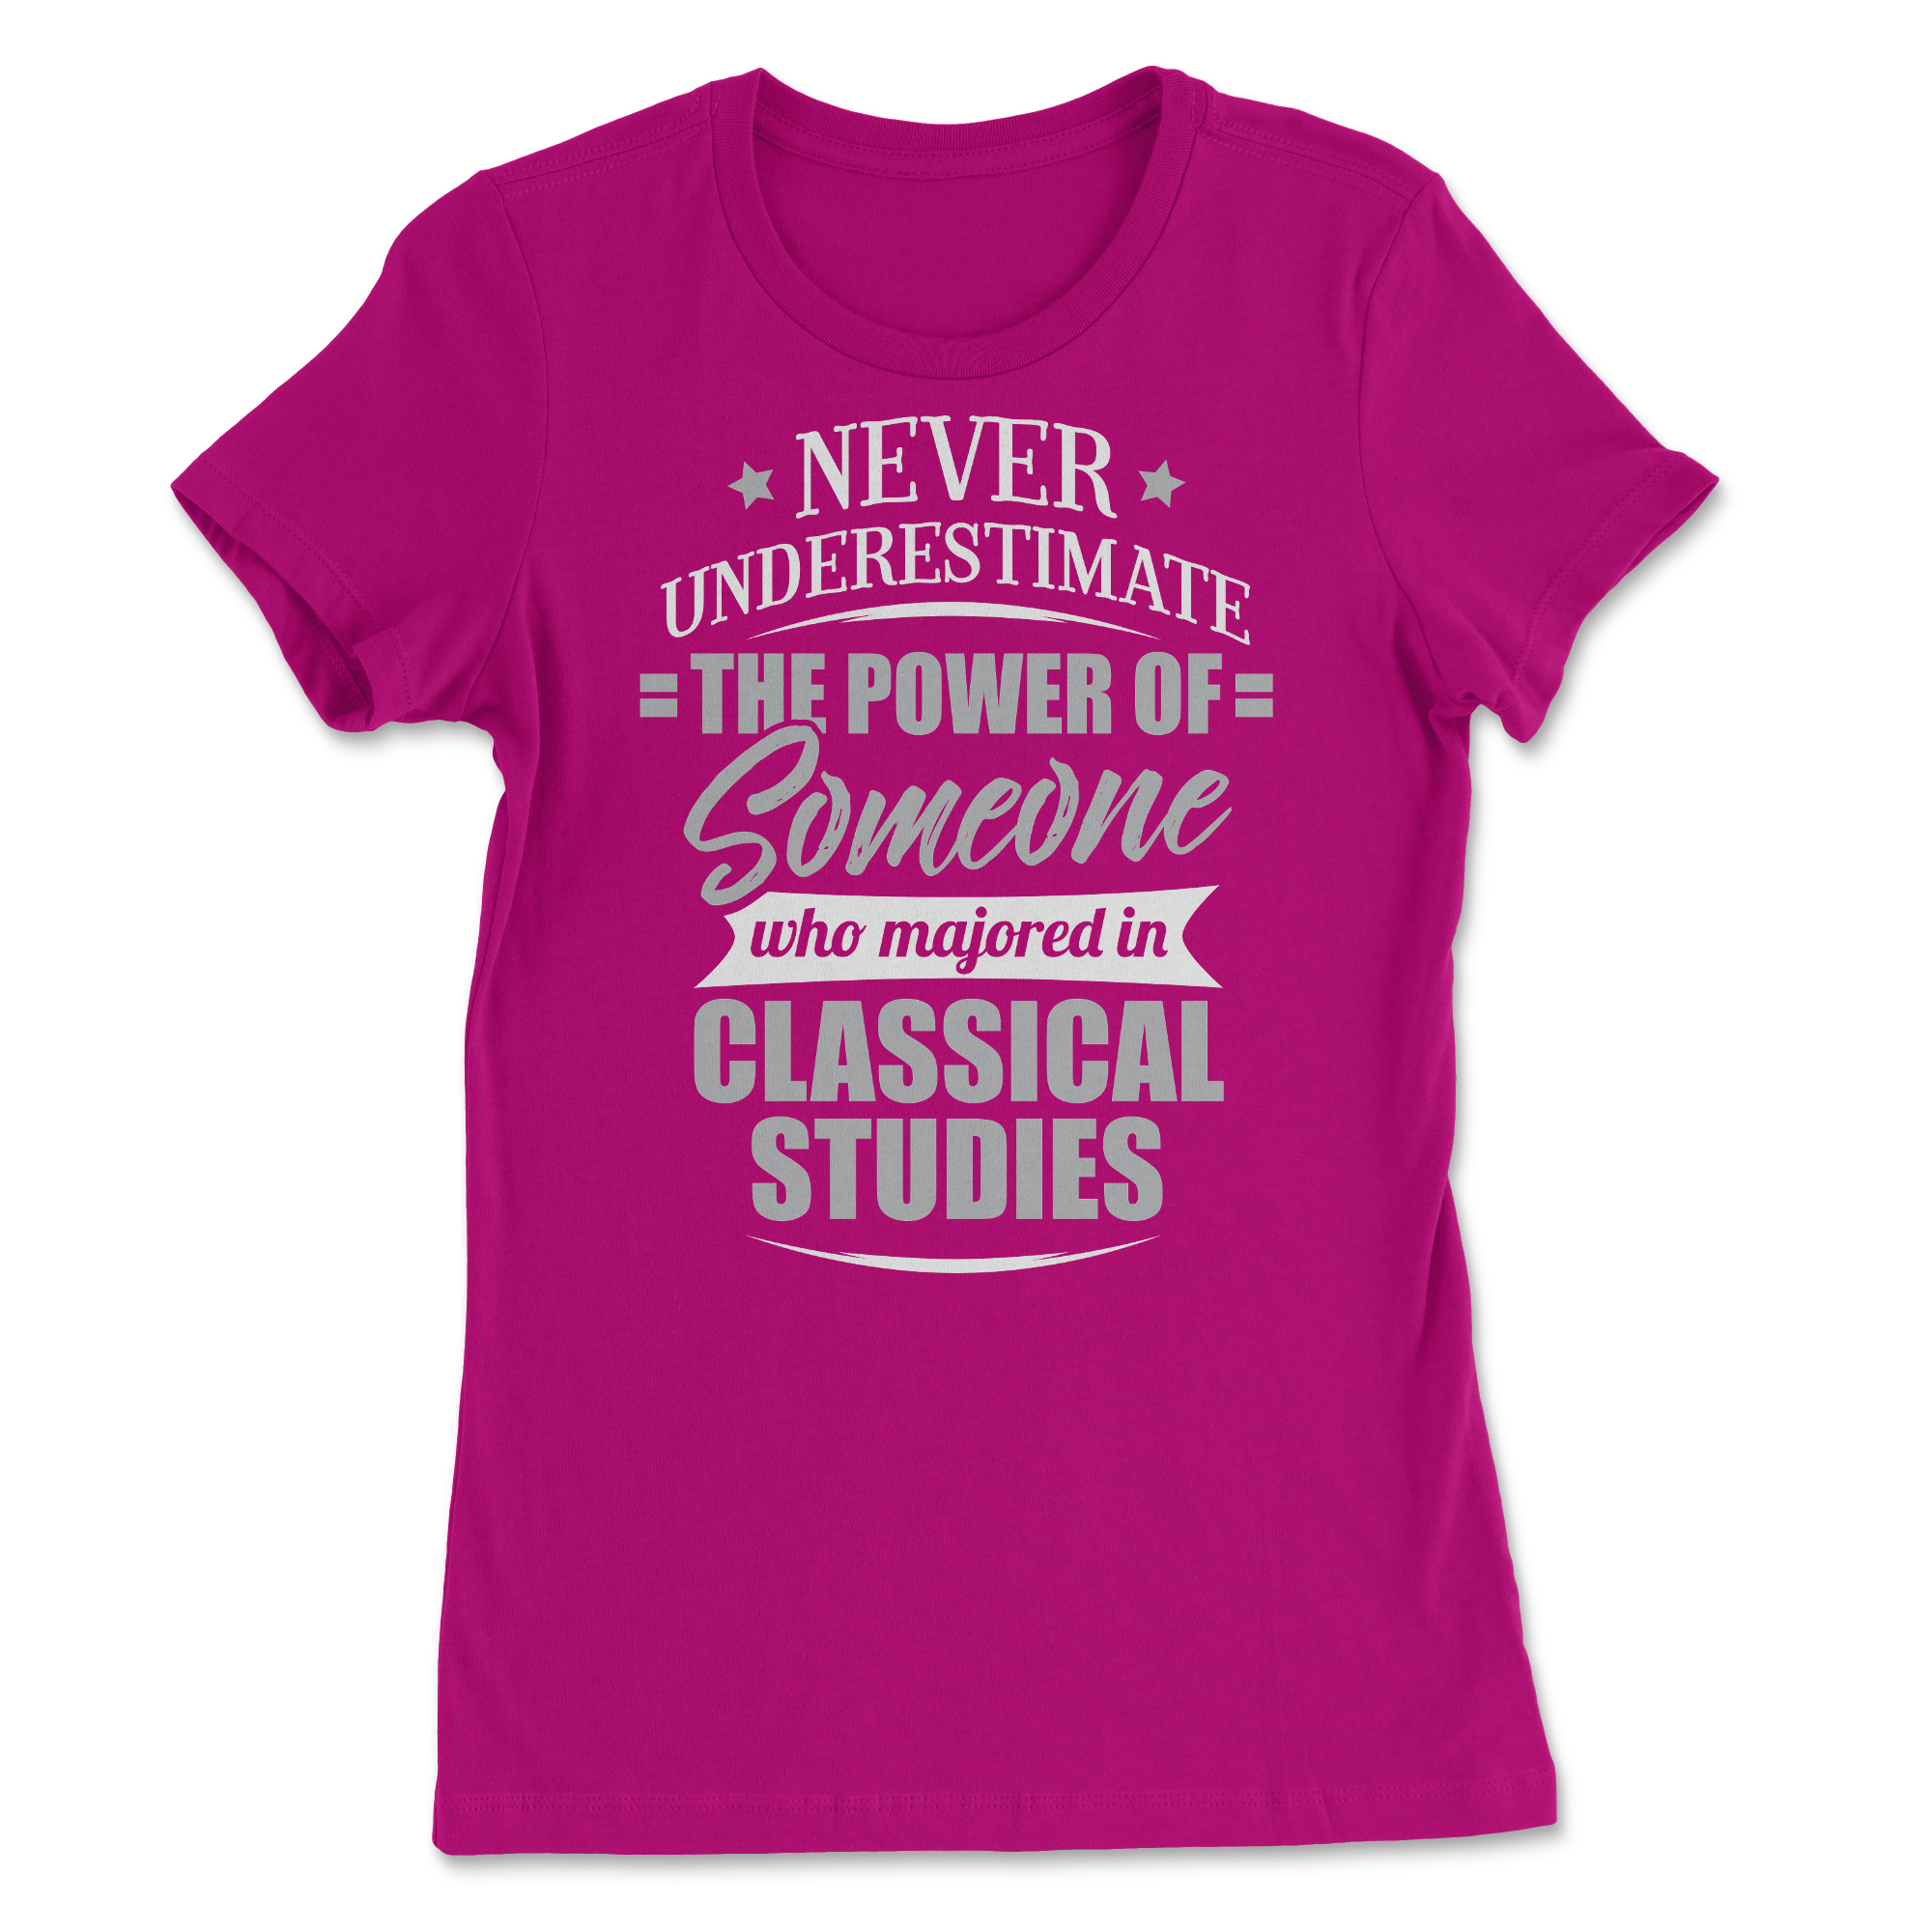 Classical Studies Shirt for Men & Women - Never Underestimat - image 1 of 8